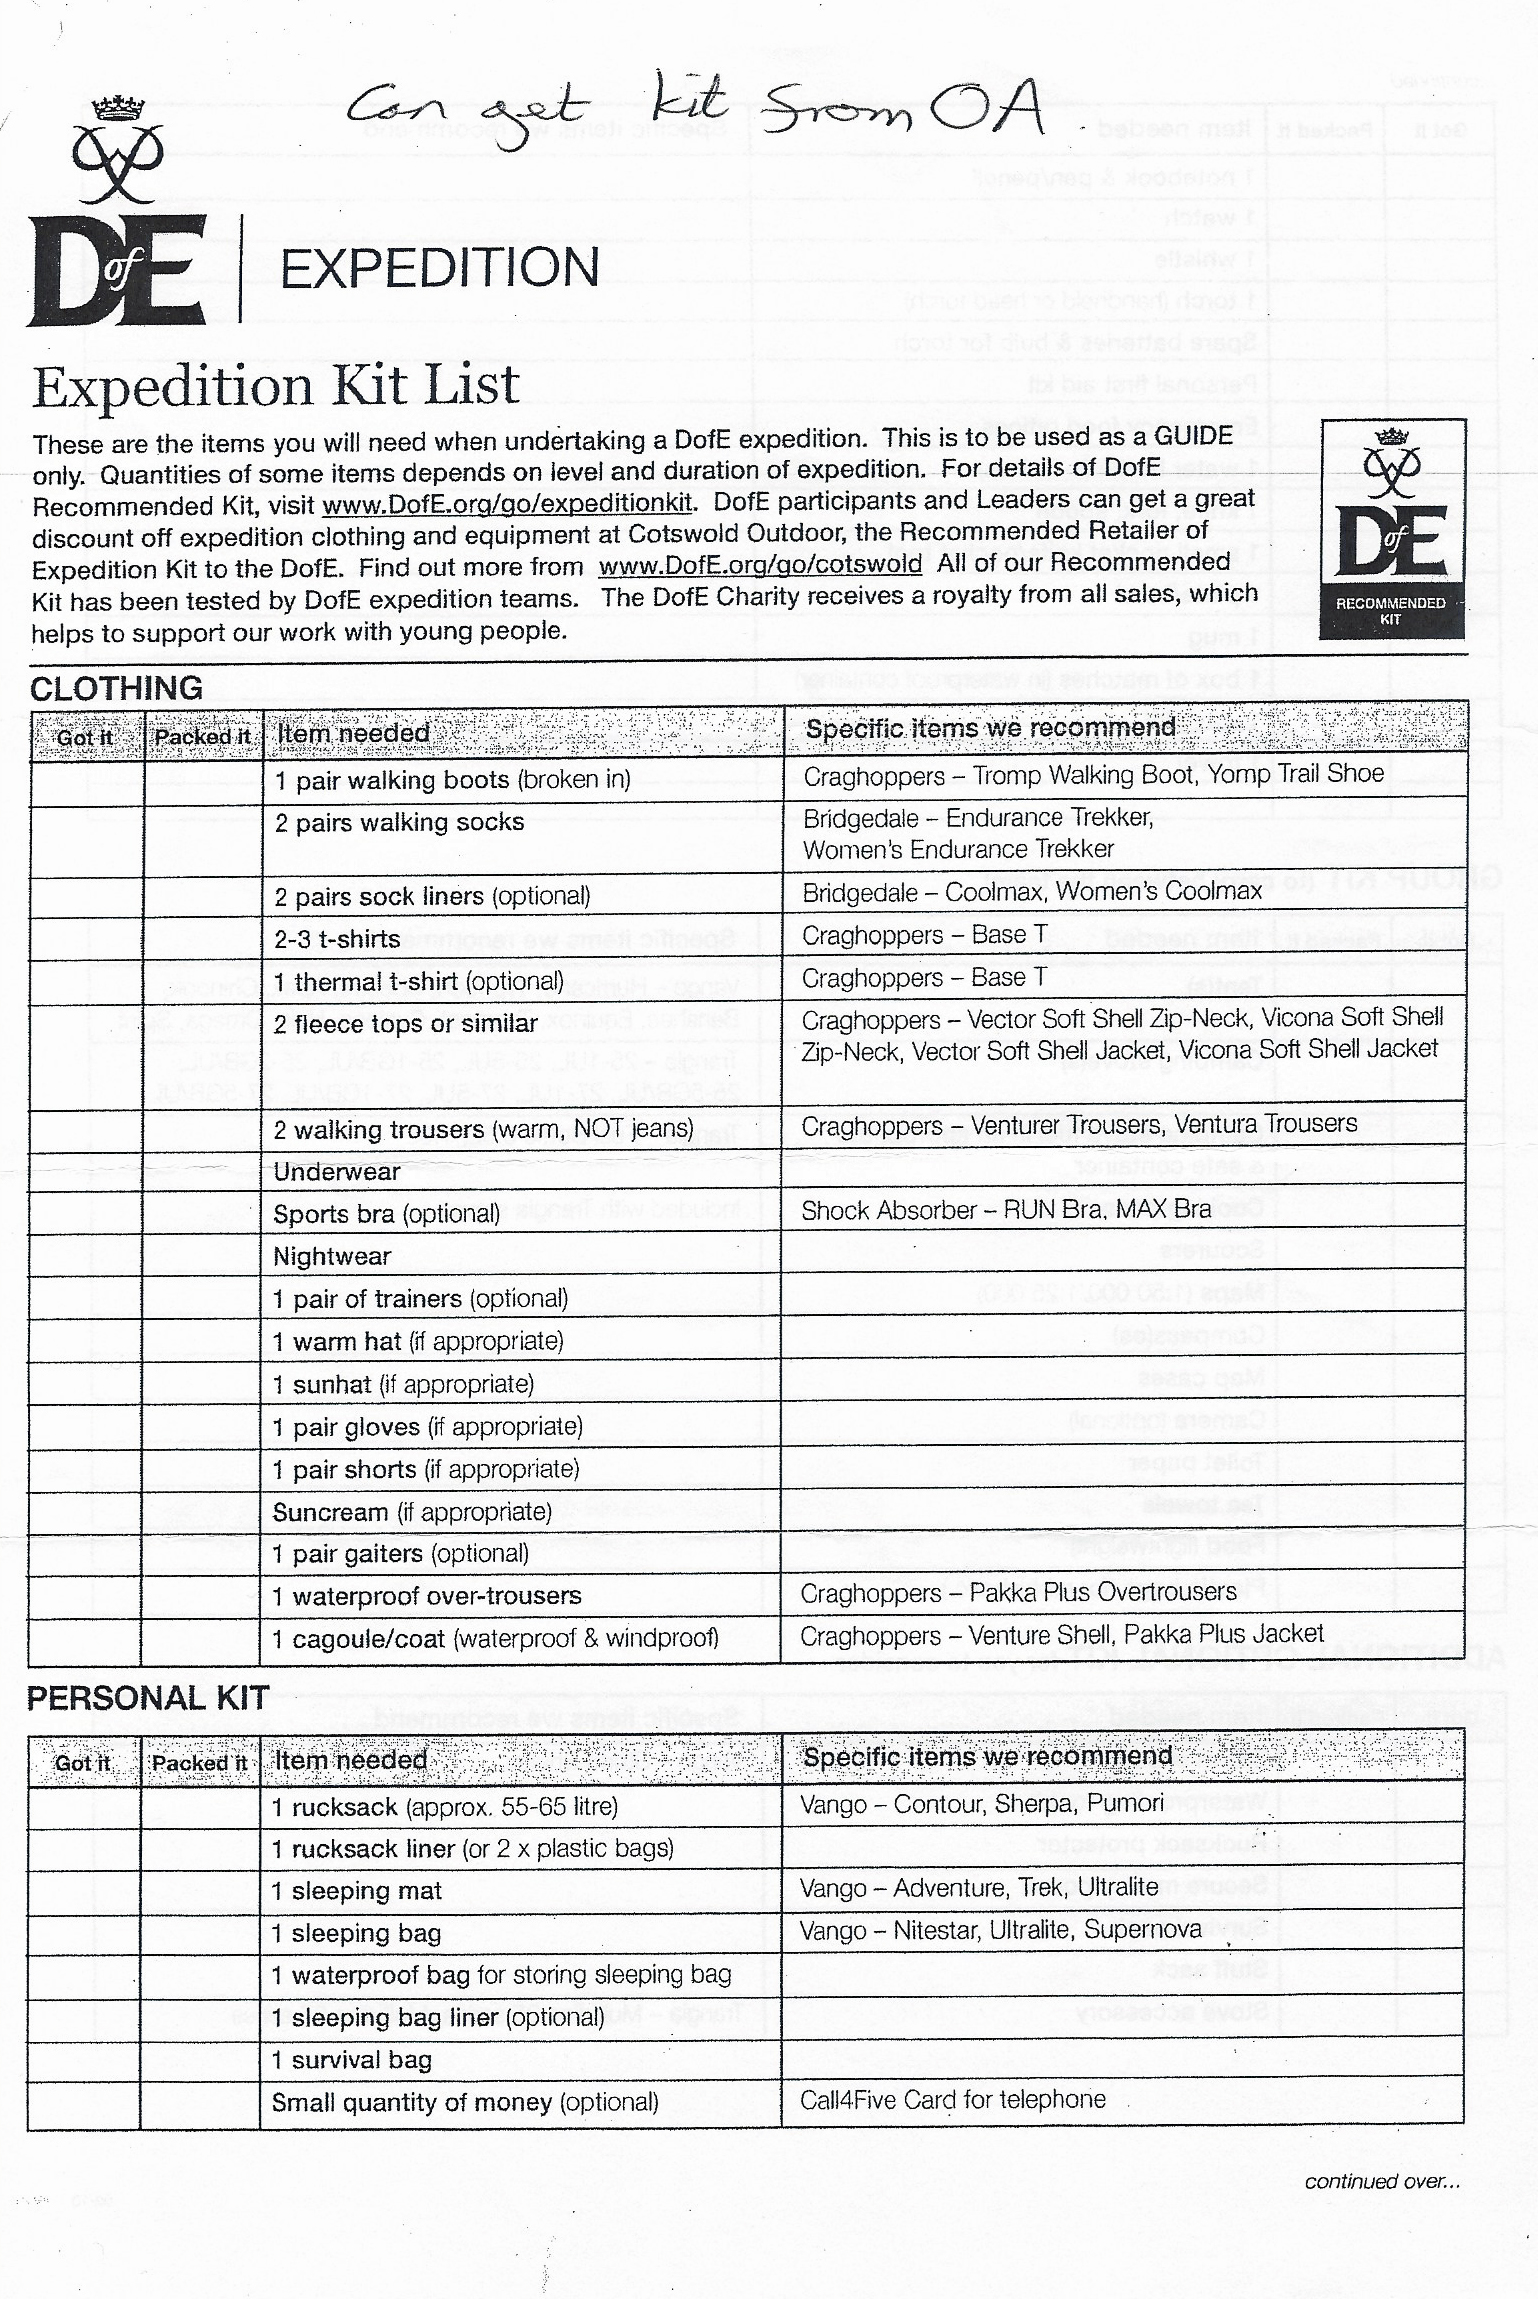 Kit List for participants on Duke of Edinburgh Expedition. 2012